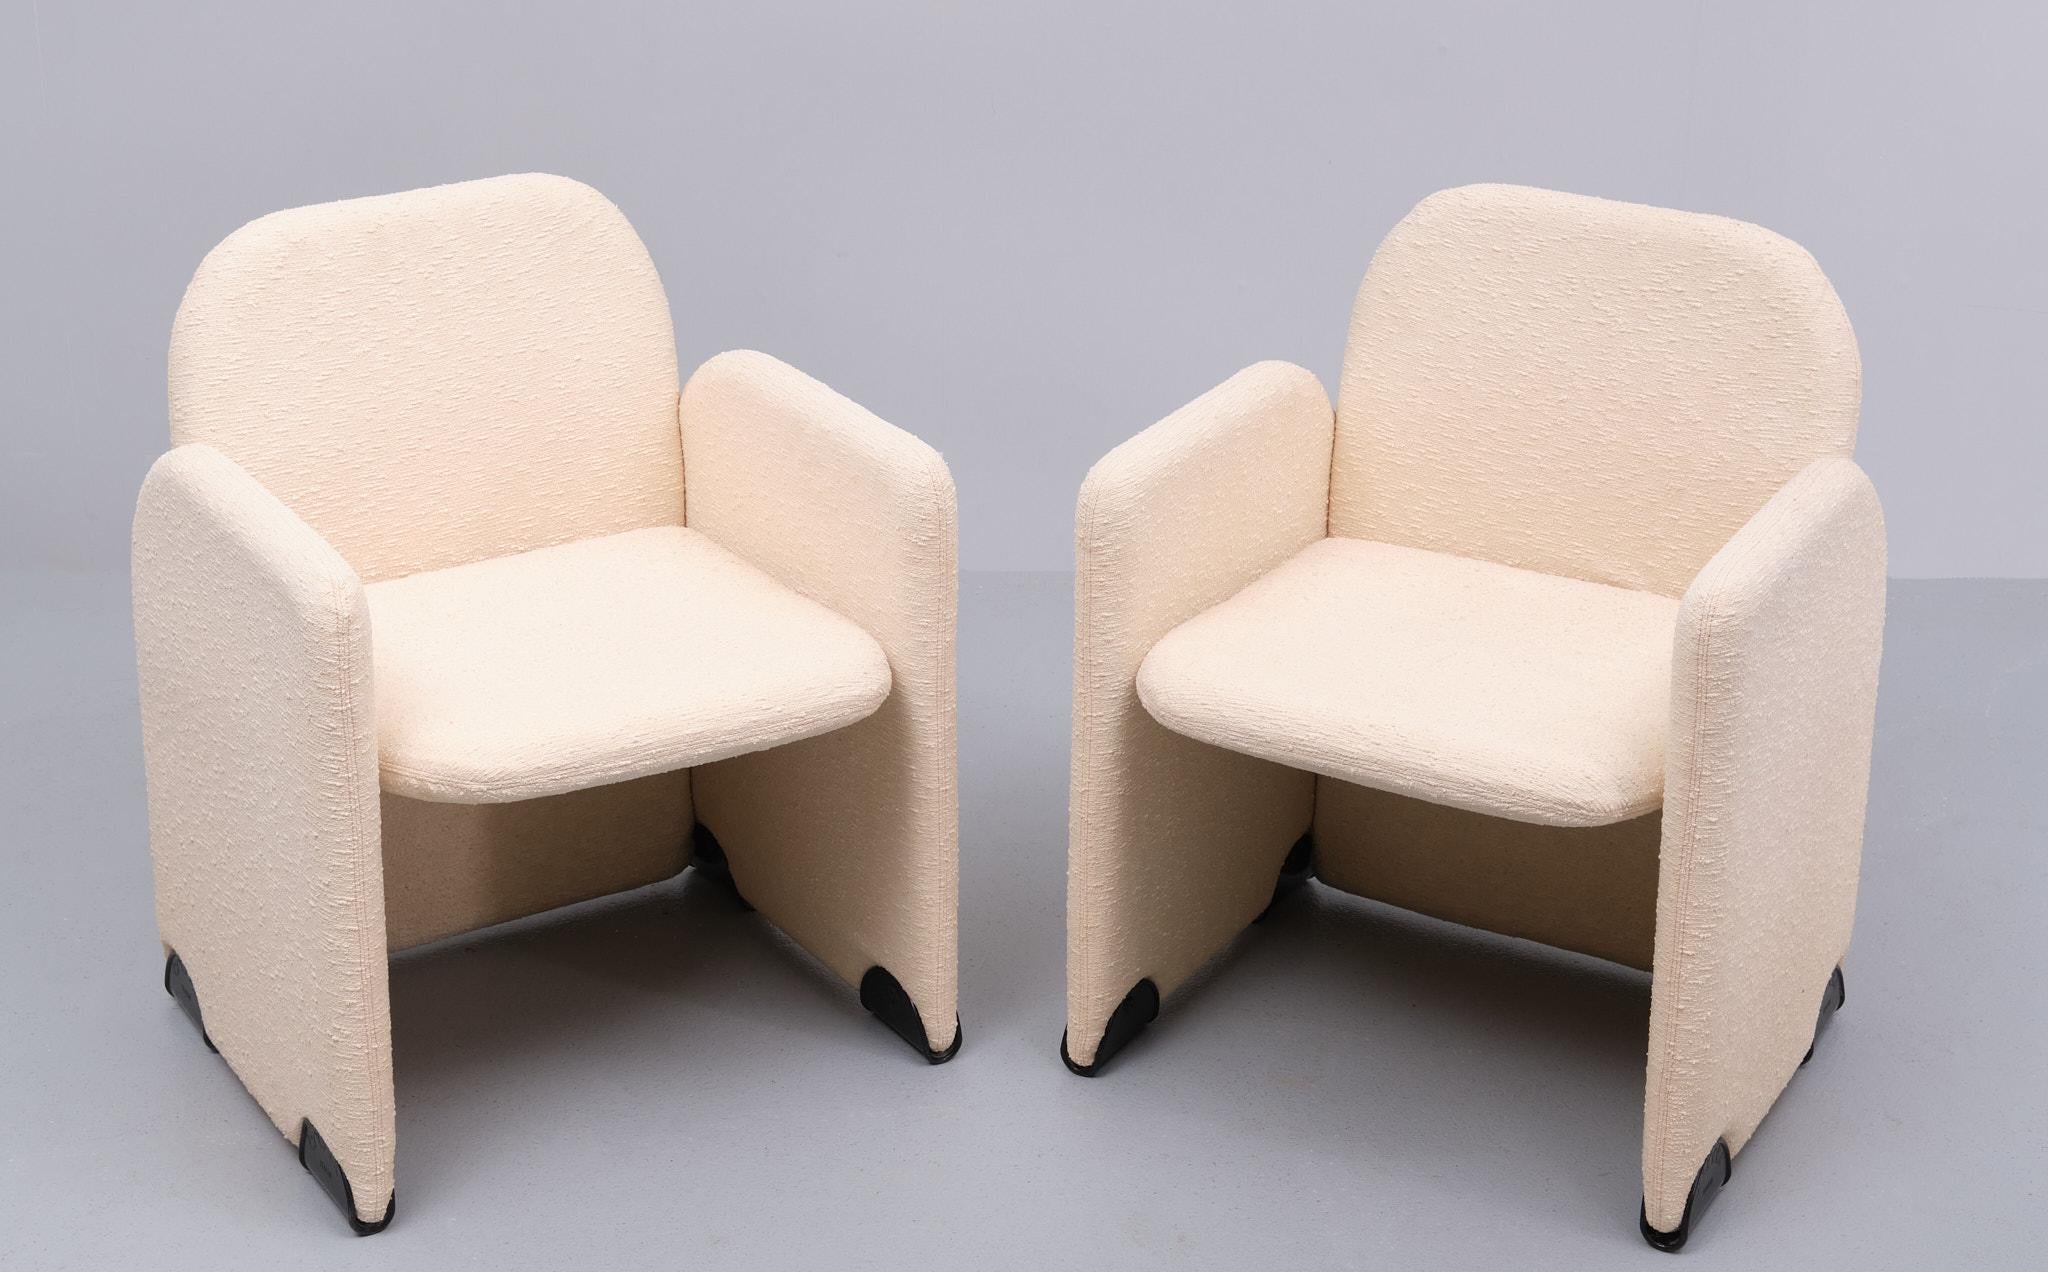 Vintage Italian Lounge Chair s Designed Ammannati & Vitelli for Brunati  1970s  In Good Condition For Sale In Den Haag, NL